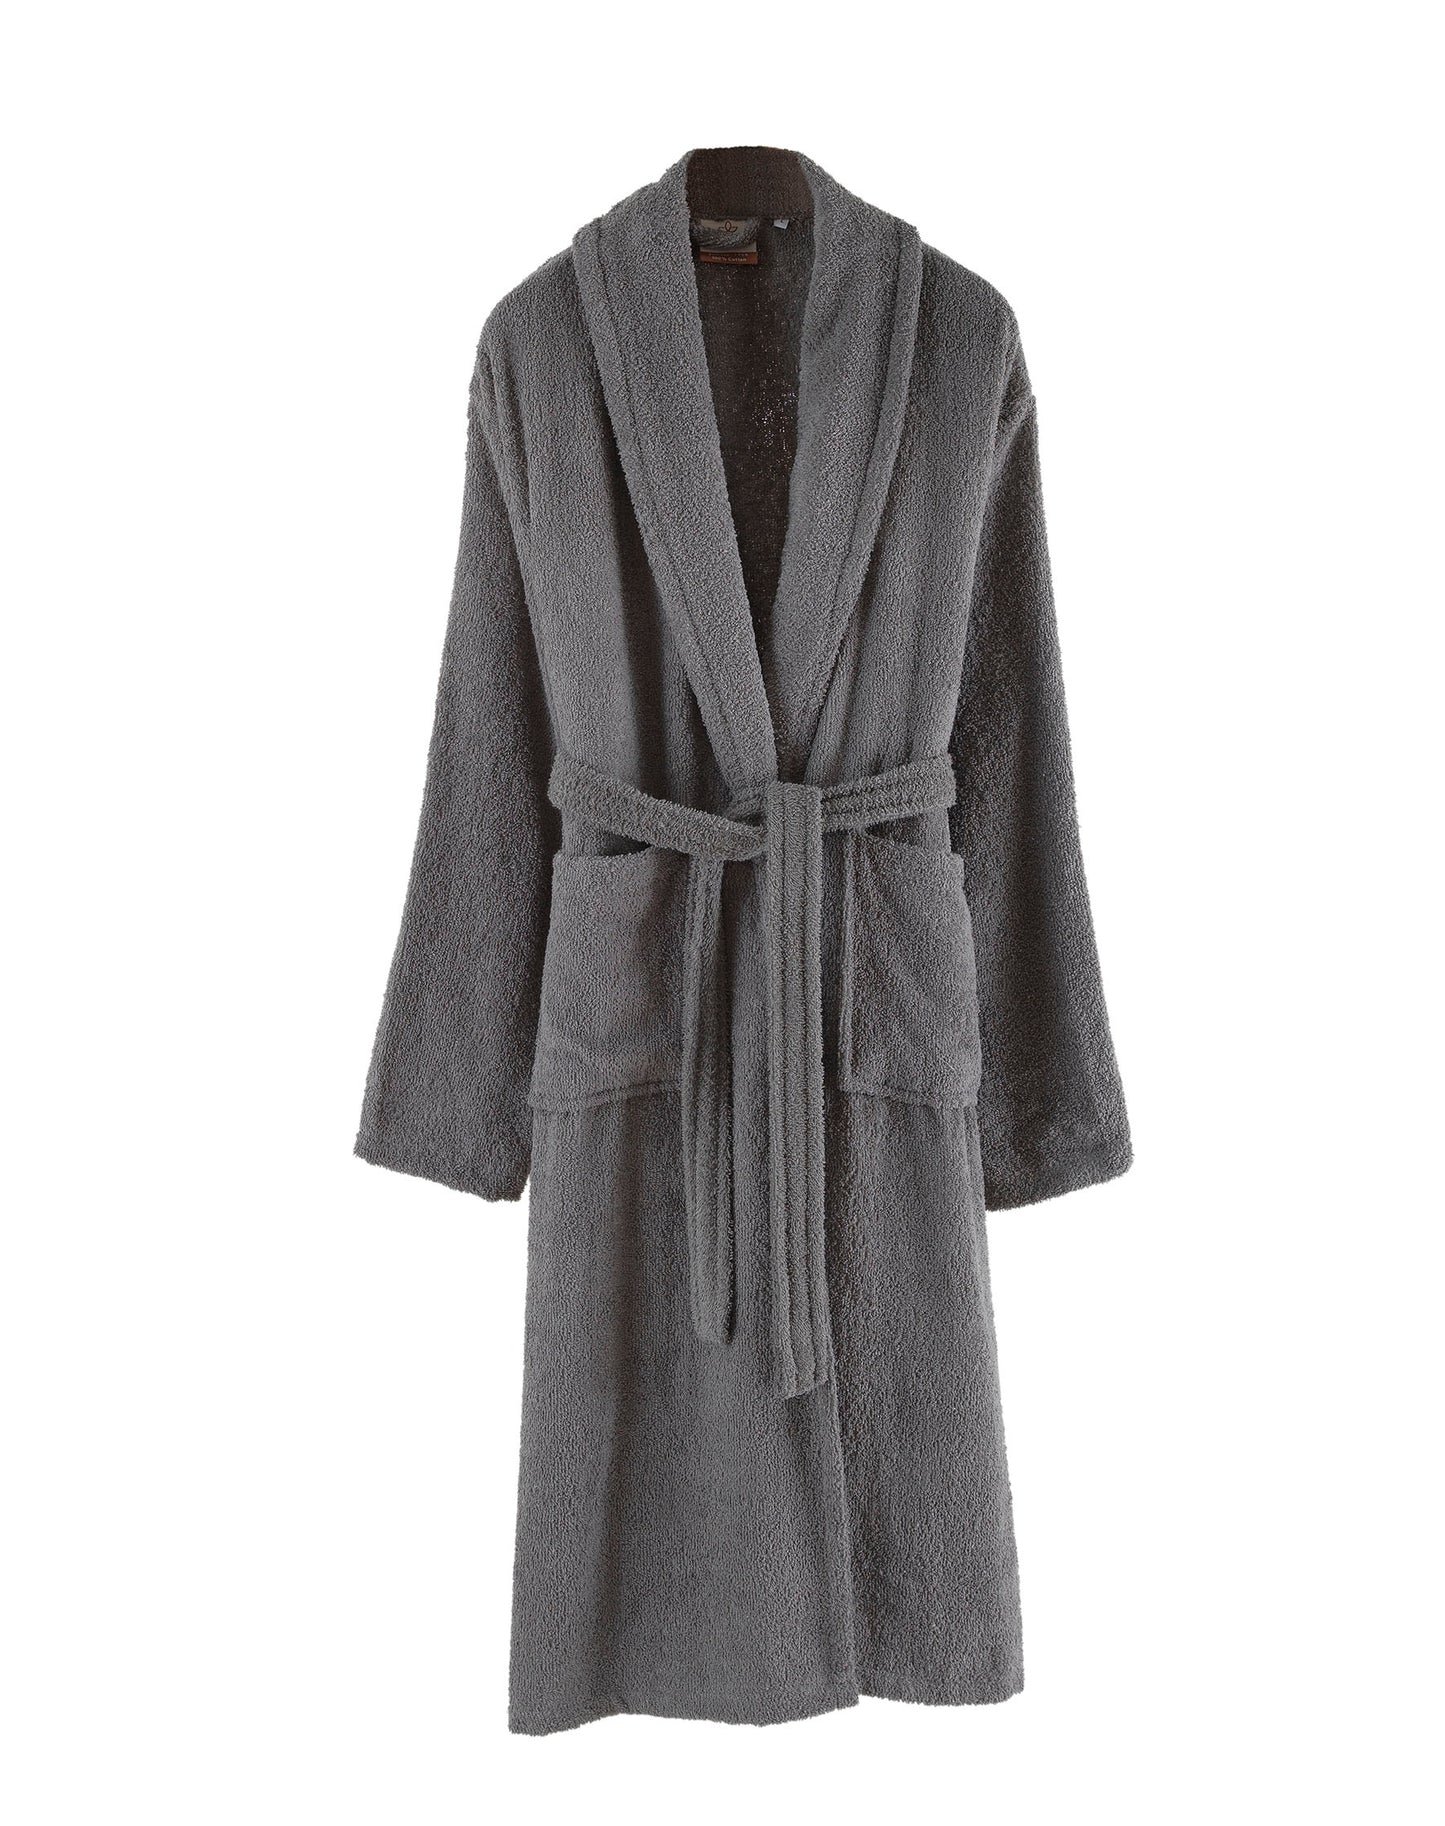 Halley Luxury Bathrobe for Women & Men, Shawl Collar Spa Bath Robes Terry Cotton Ultra Soft Shower Robe with Pockets Grey (XL)